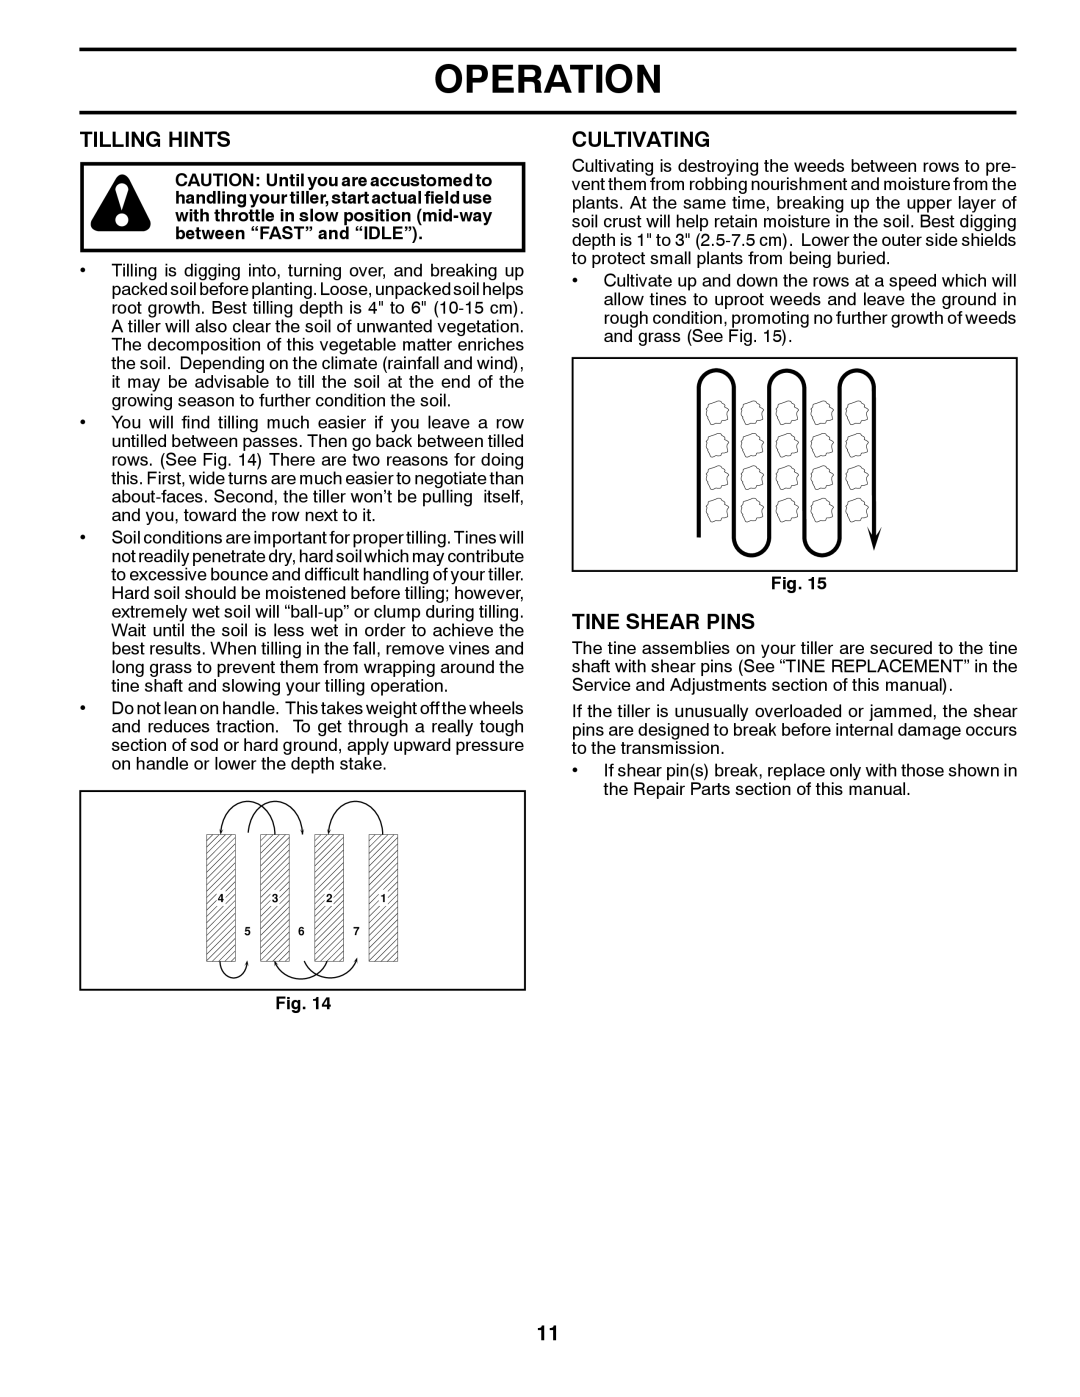 Husqvarna RTT900 owner manual Tilling Hints, Cultivating, Tine Shear Pins, Operation 